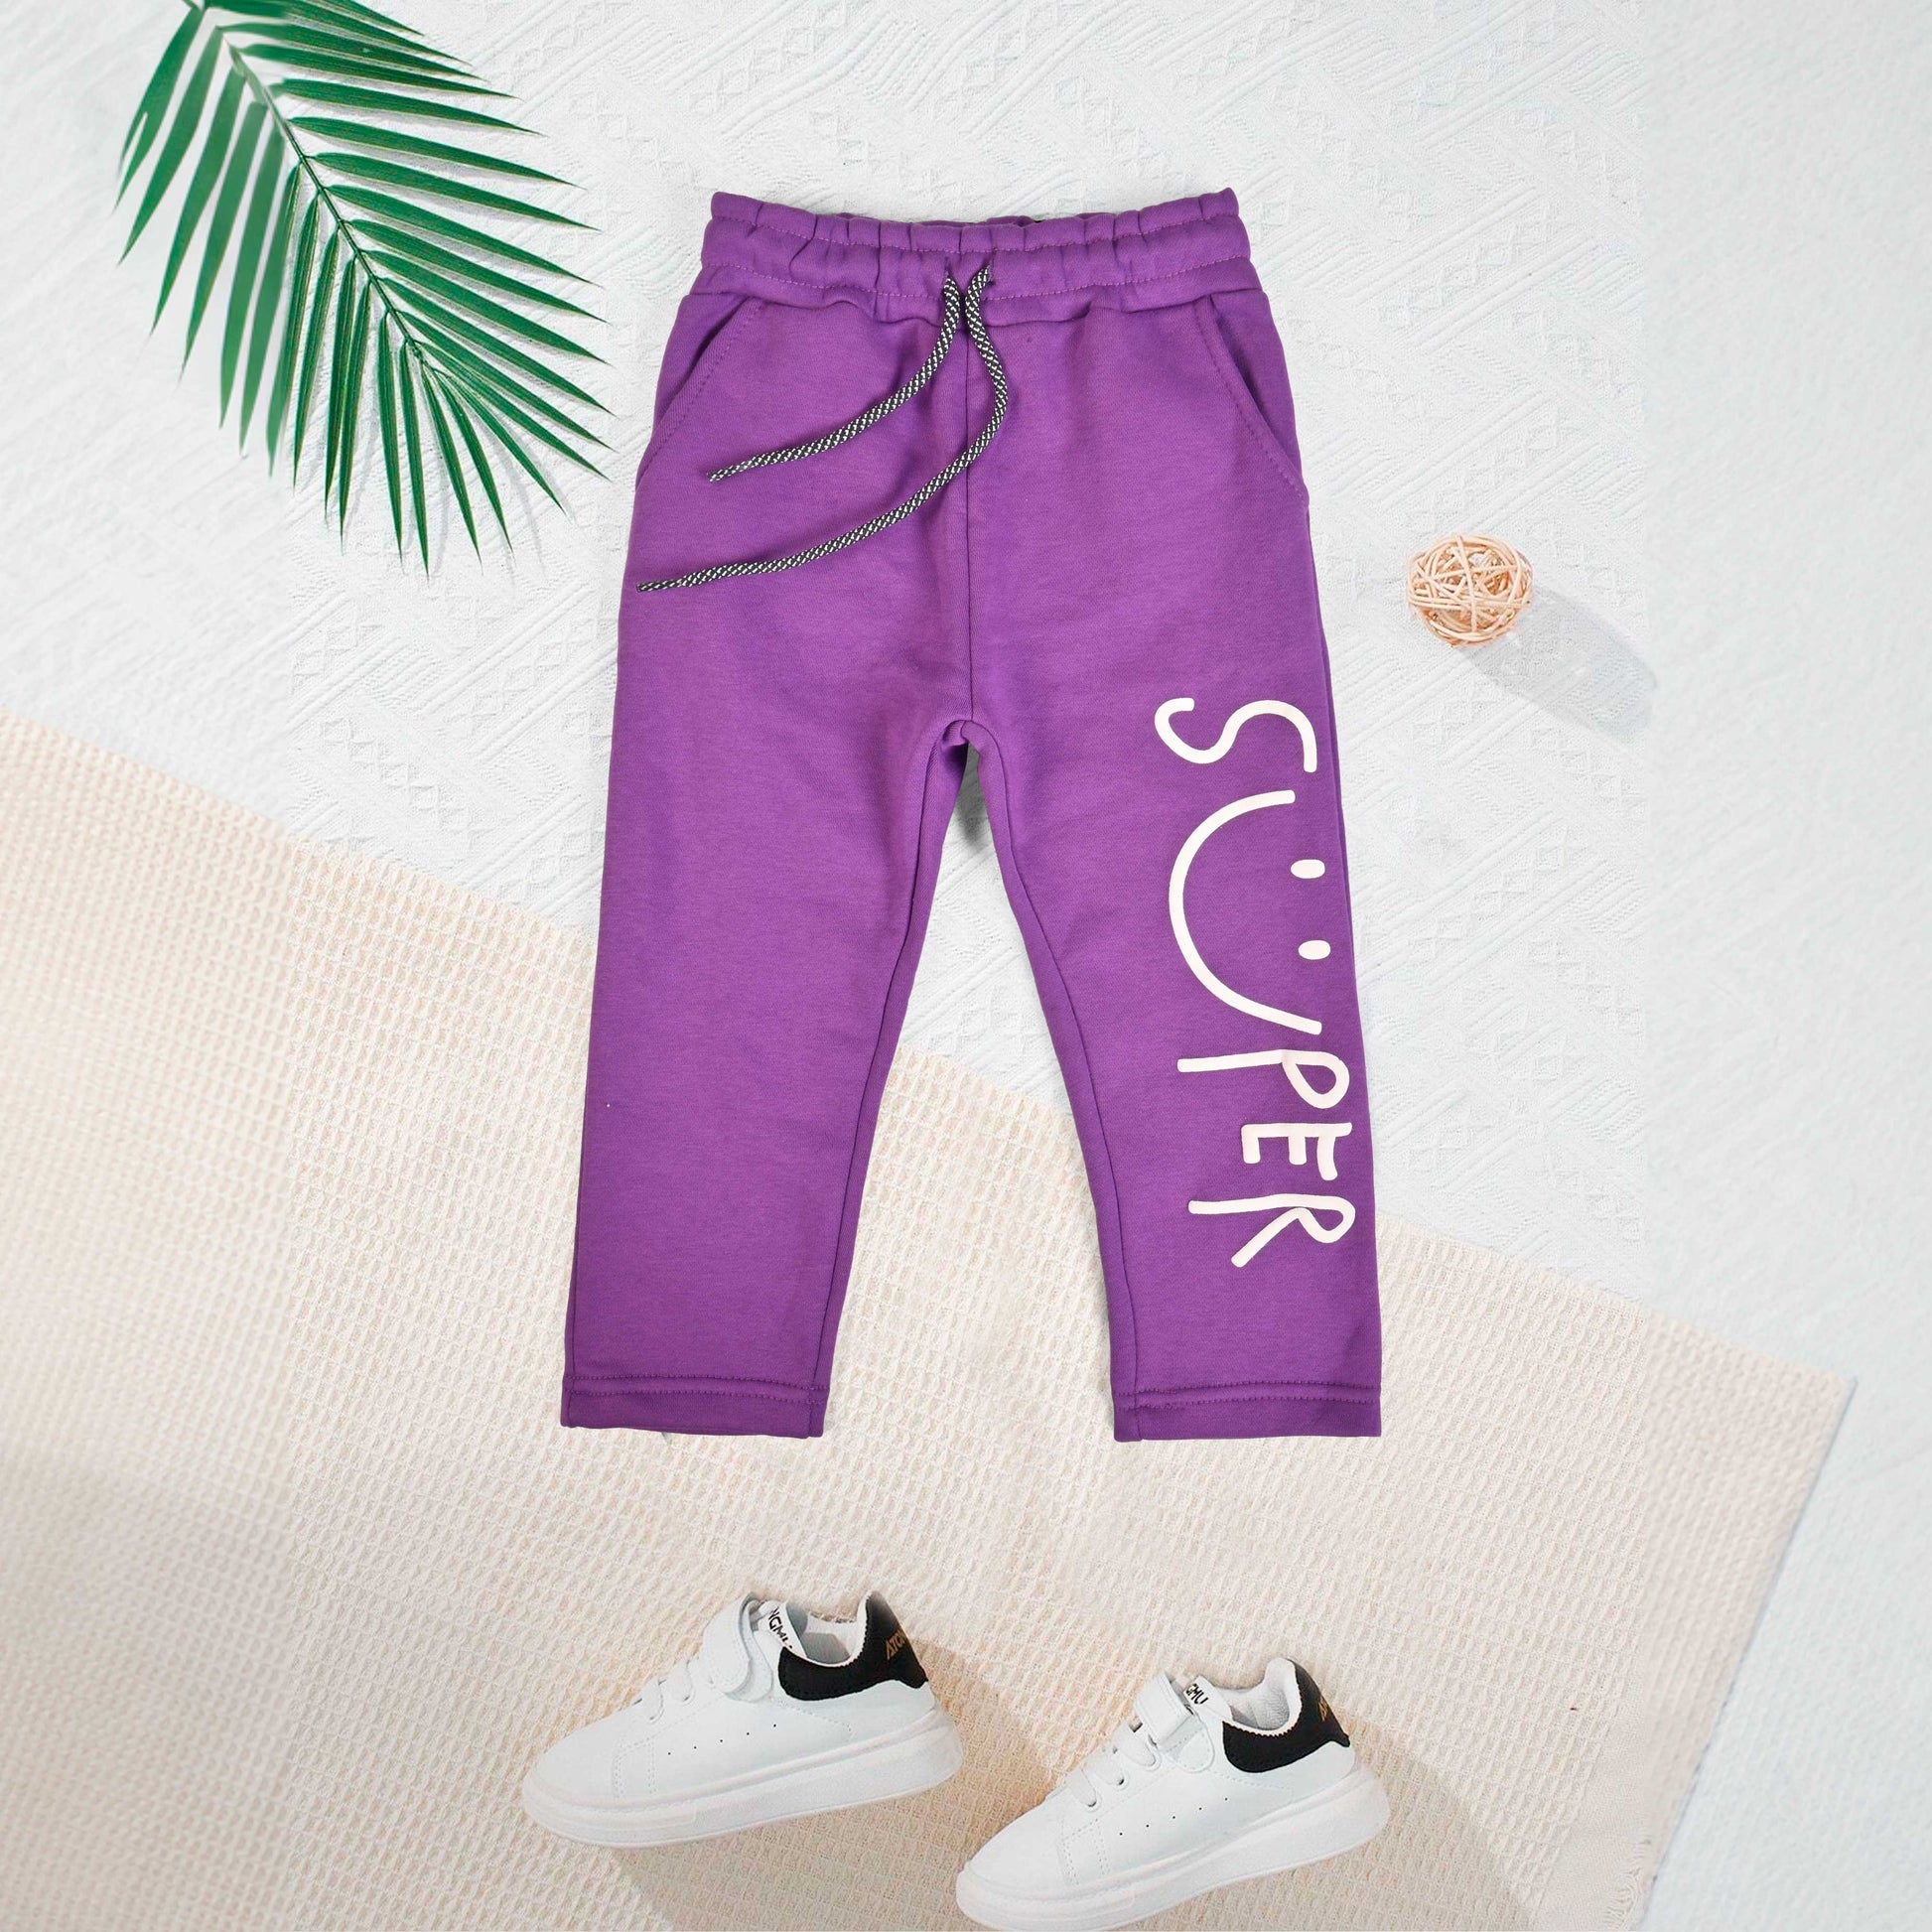 Max 21 Boy's Super Emoji Printed Fleece Trousers Boy's Sweat Pants SZK Purple 3-4 Years 